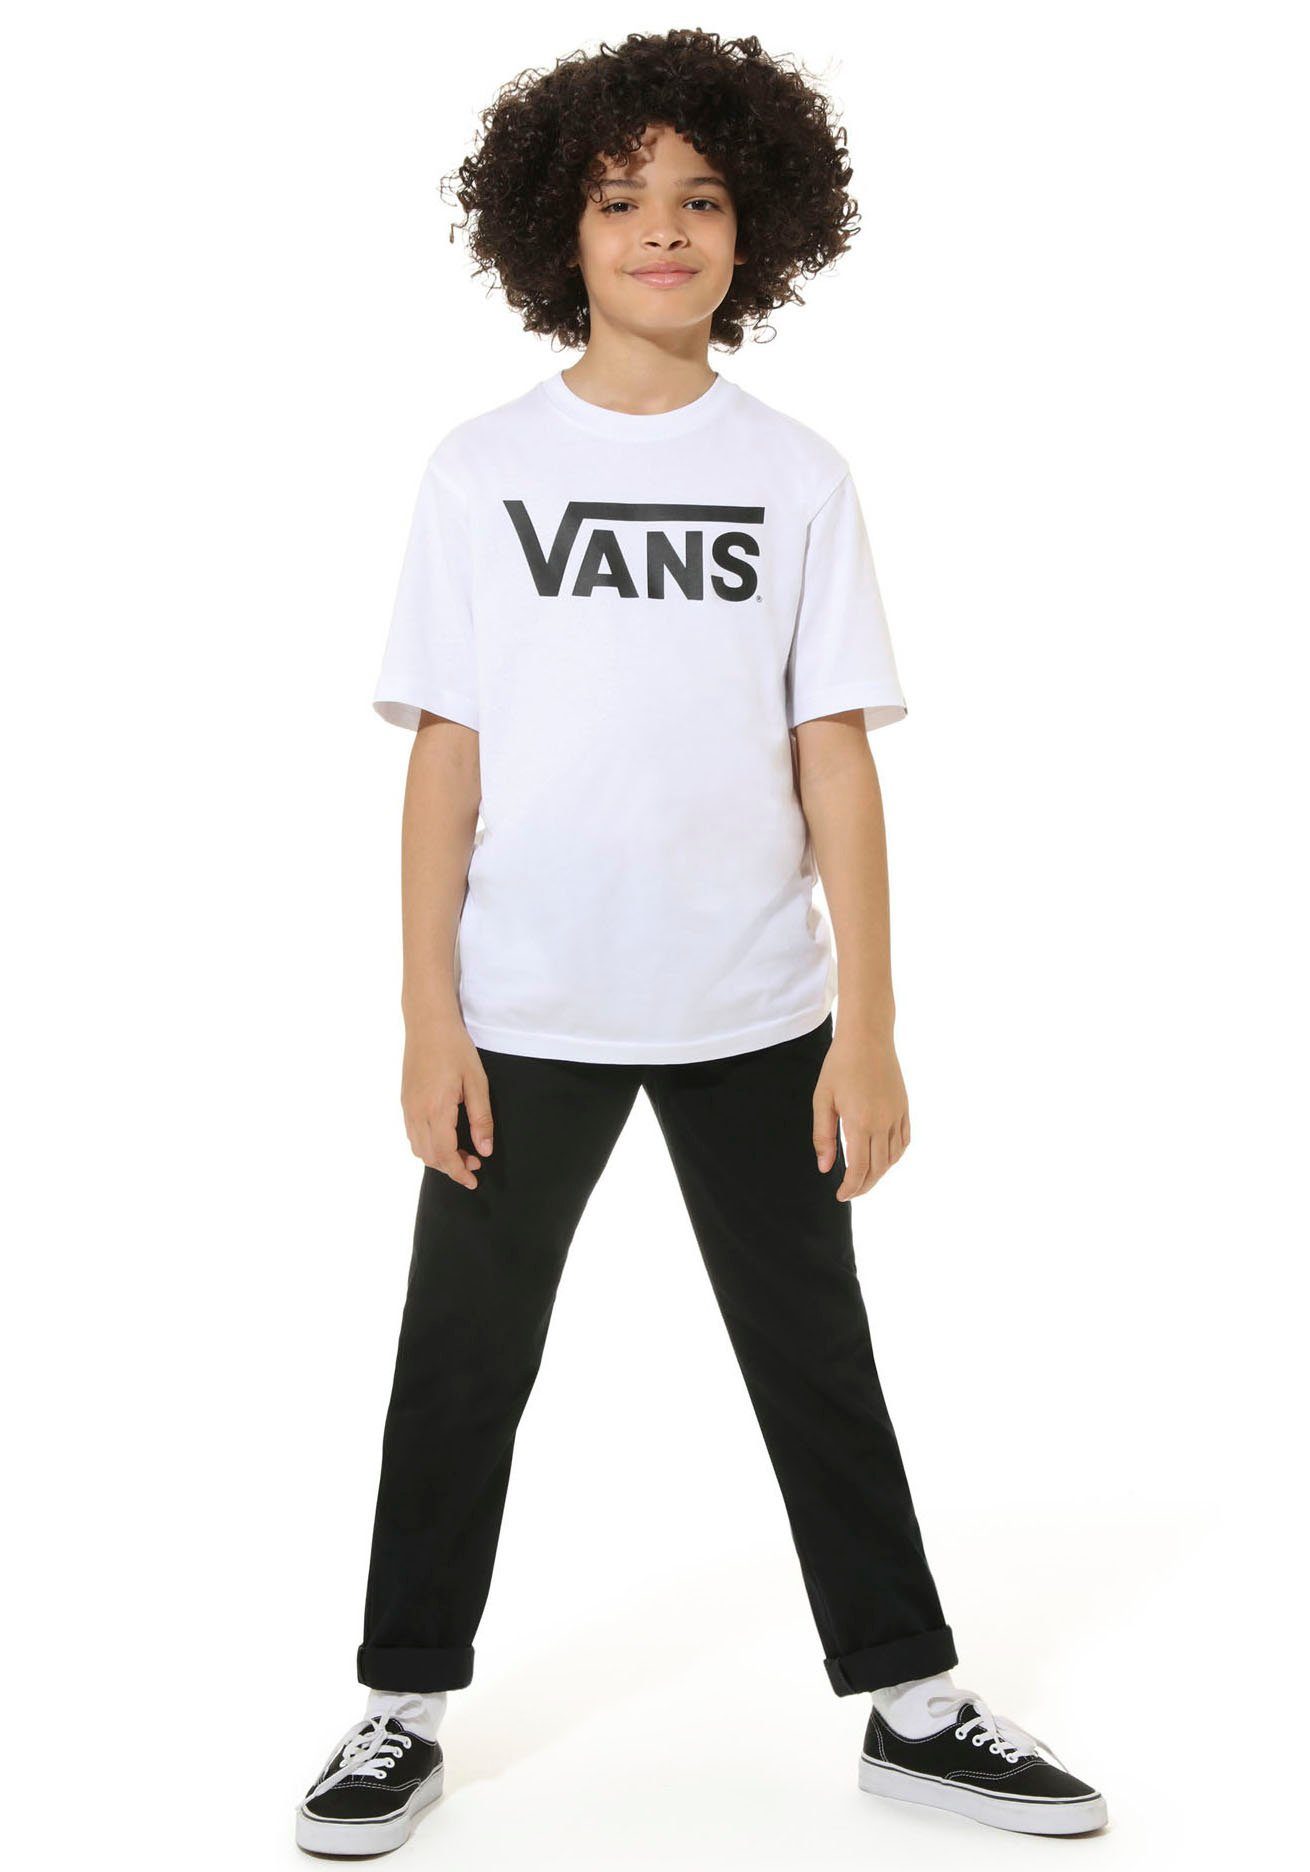 Vans T-Shirt VANS CLASSIC BOYS weiß